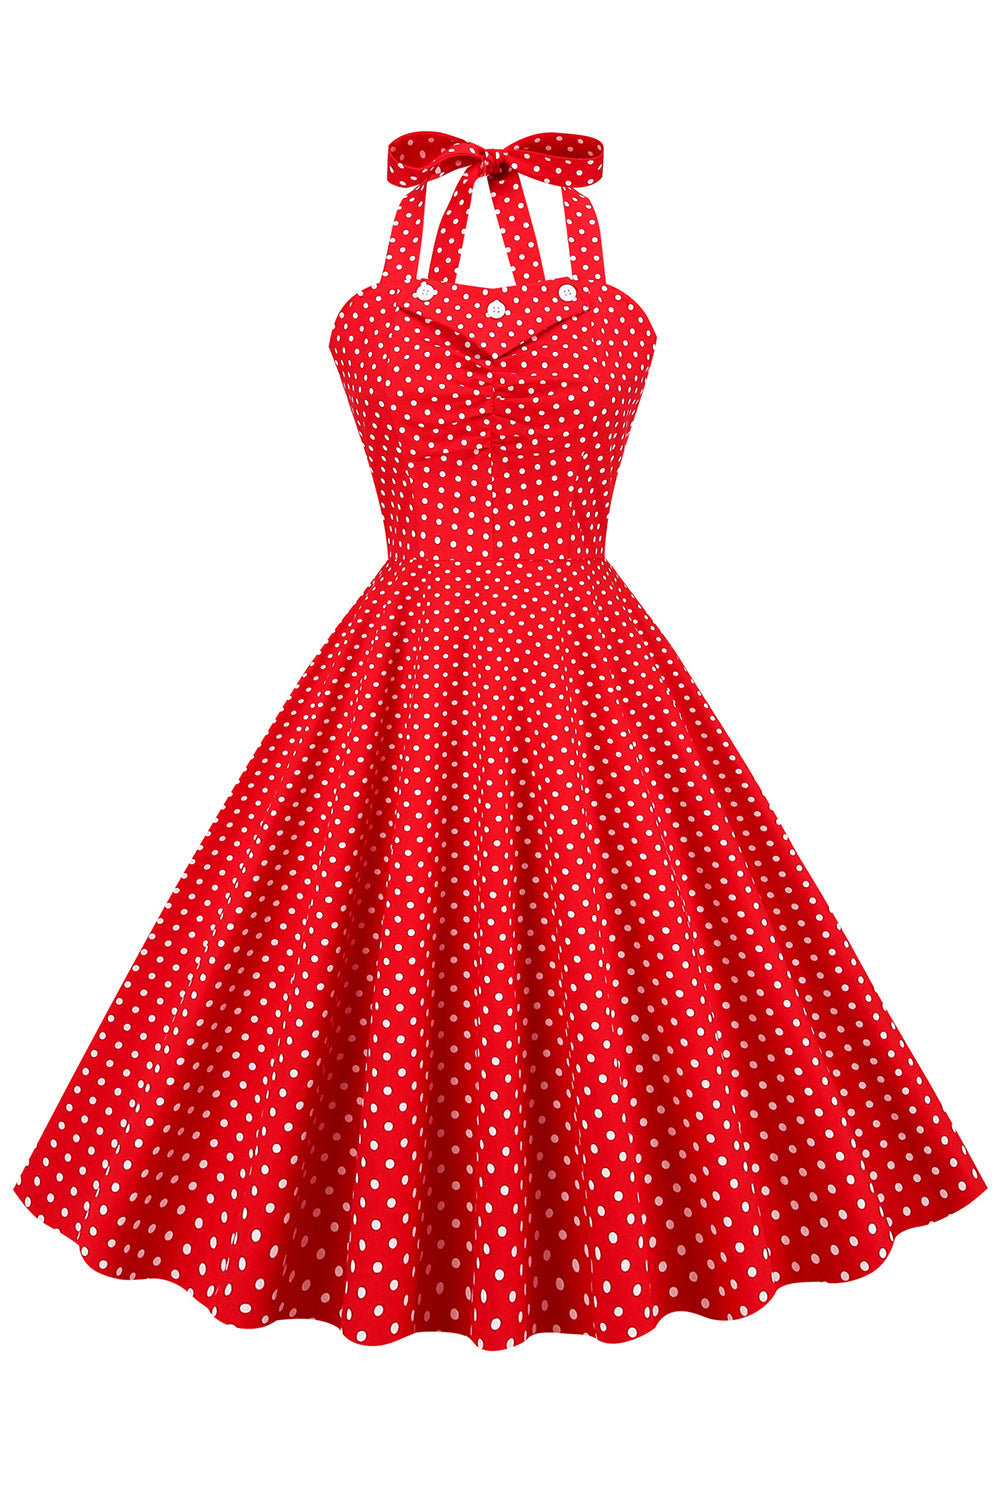 Zapaka Women Red Polka Dots 1950s Dress Retro Style Halter Vintage ...